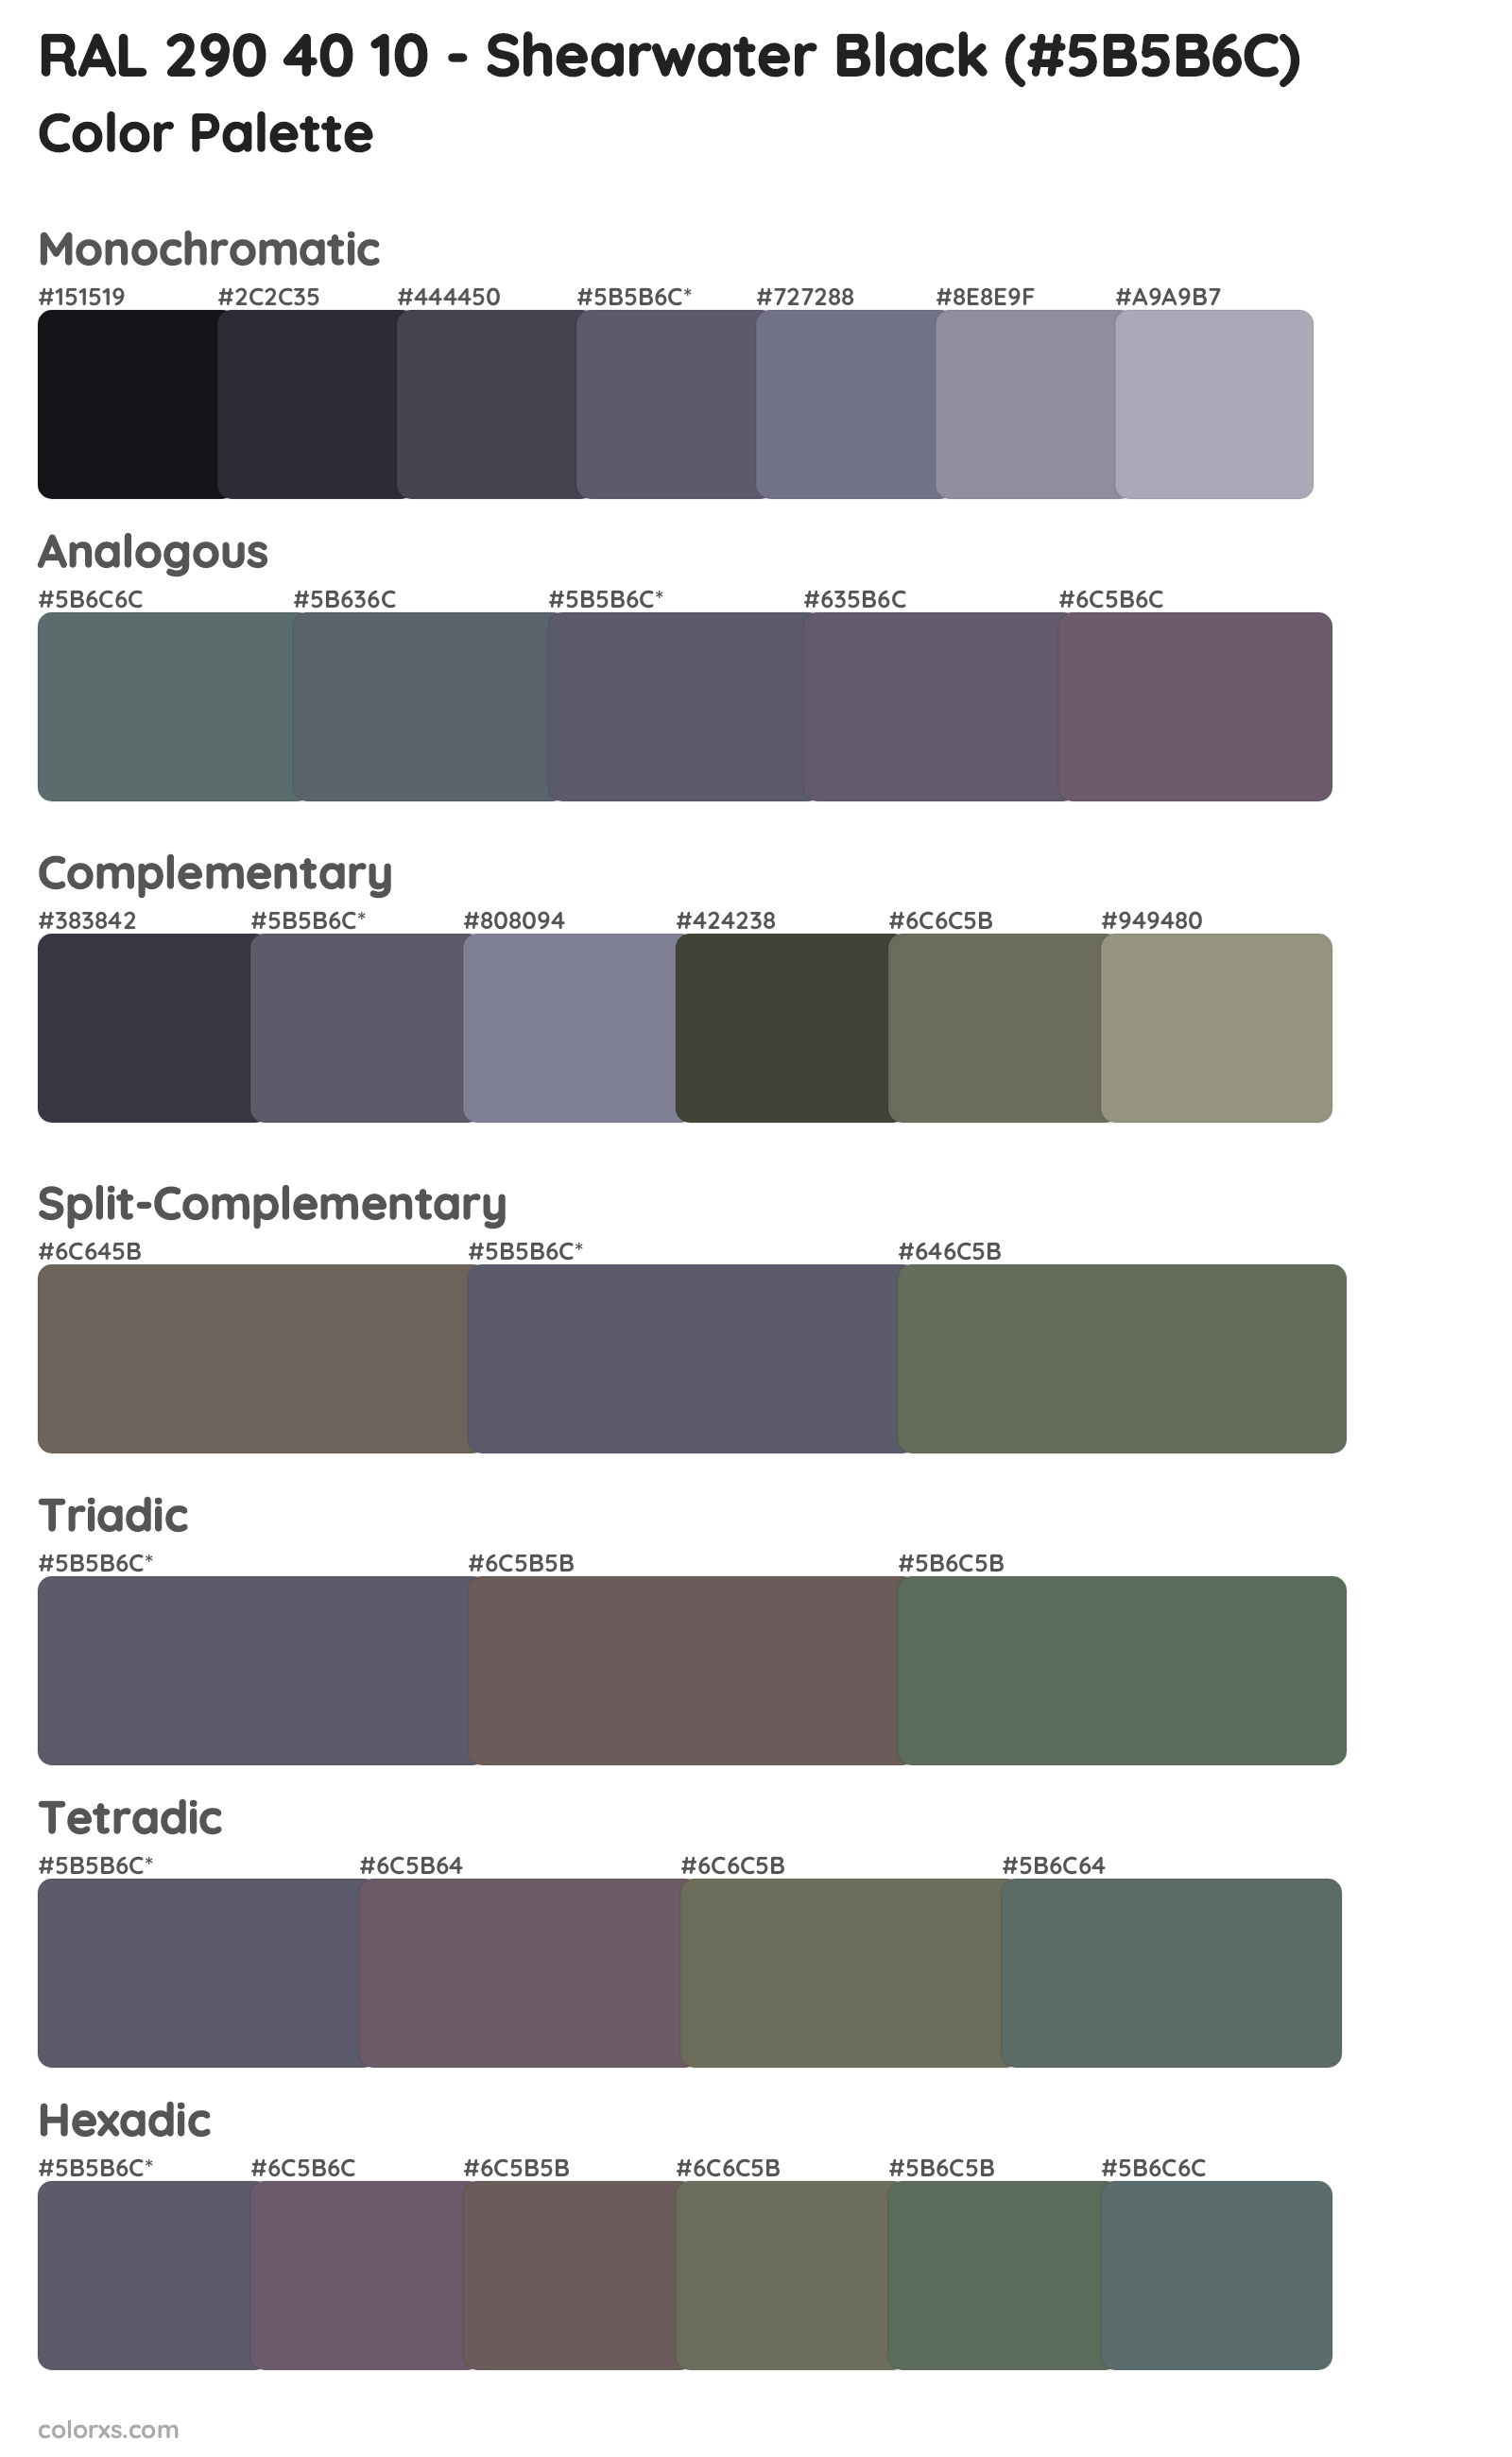 RAL 290 40 10 - Shearwater Black Color Scheme Palettes